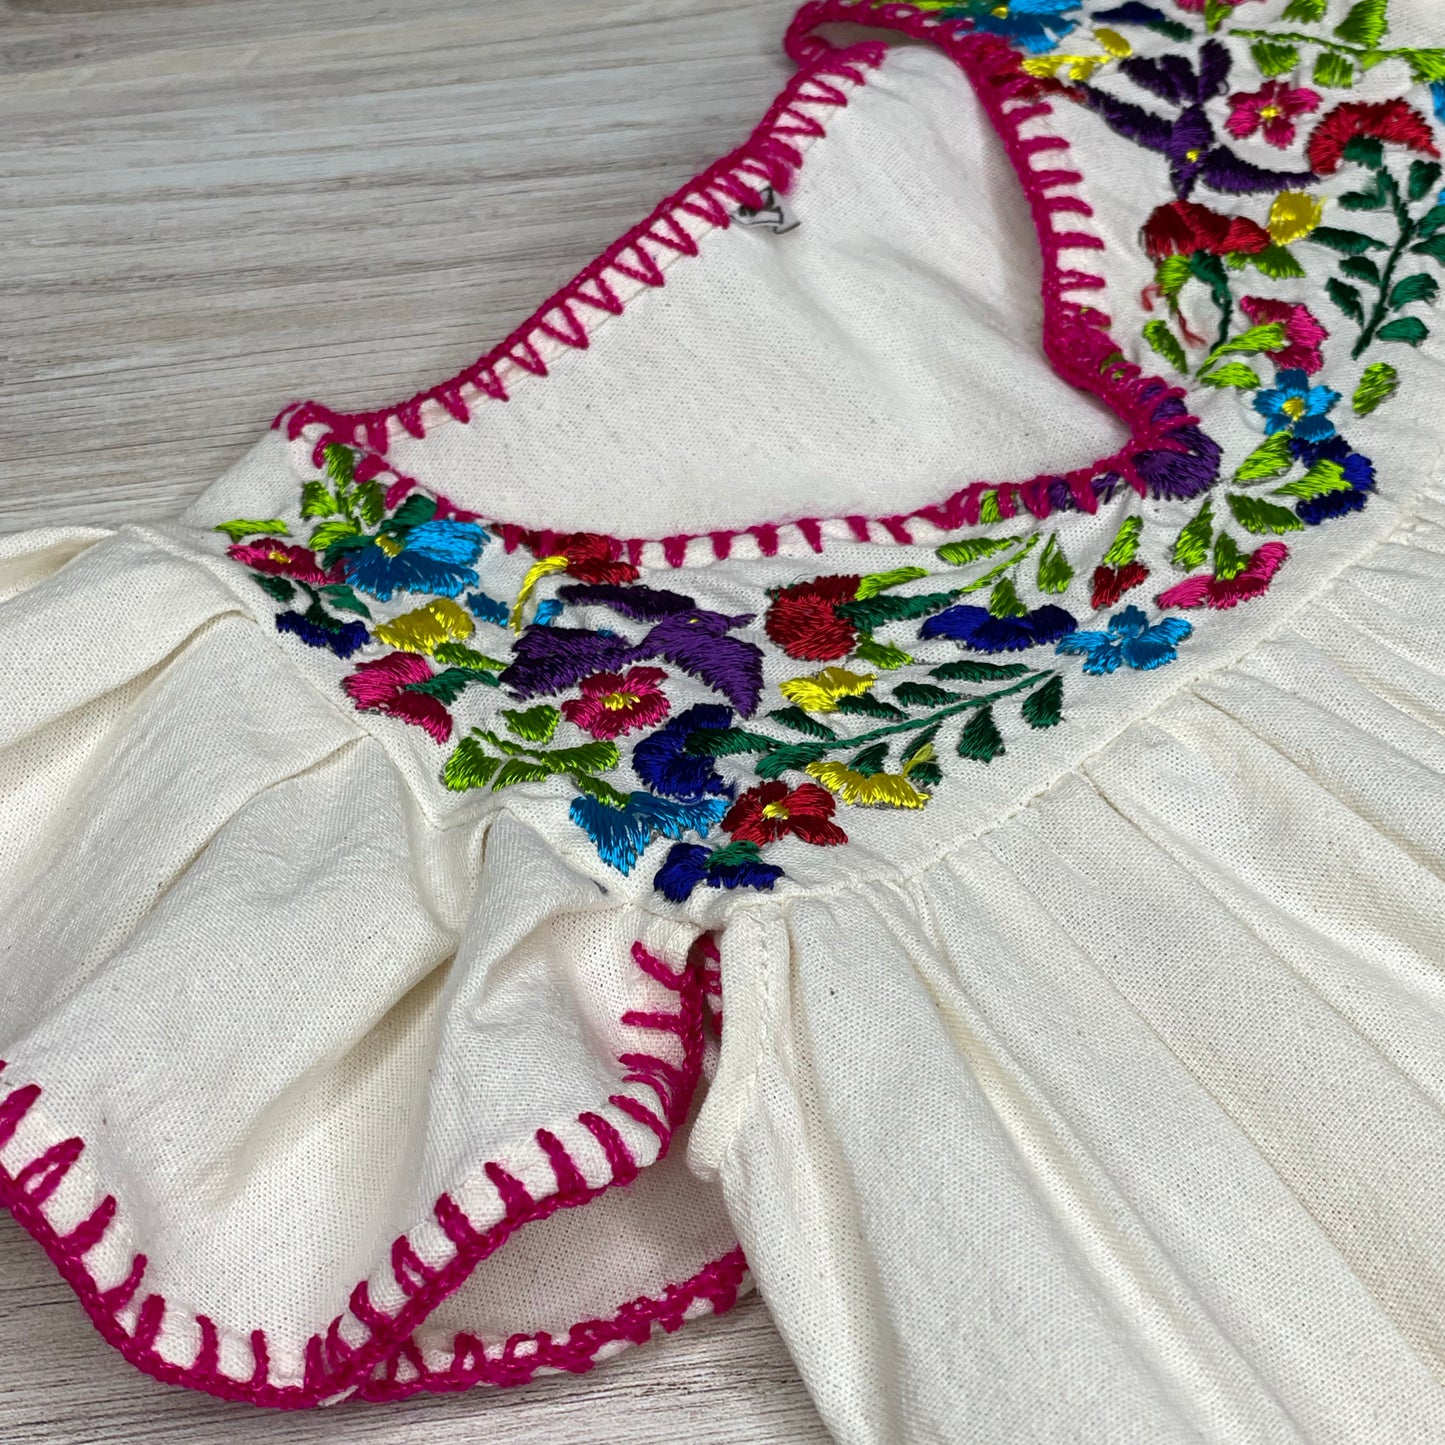 Mexican Girl San Antonino Butterfly Sleeve Dress